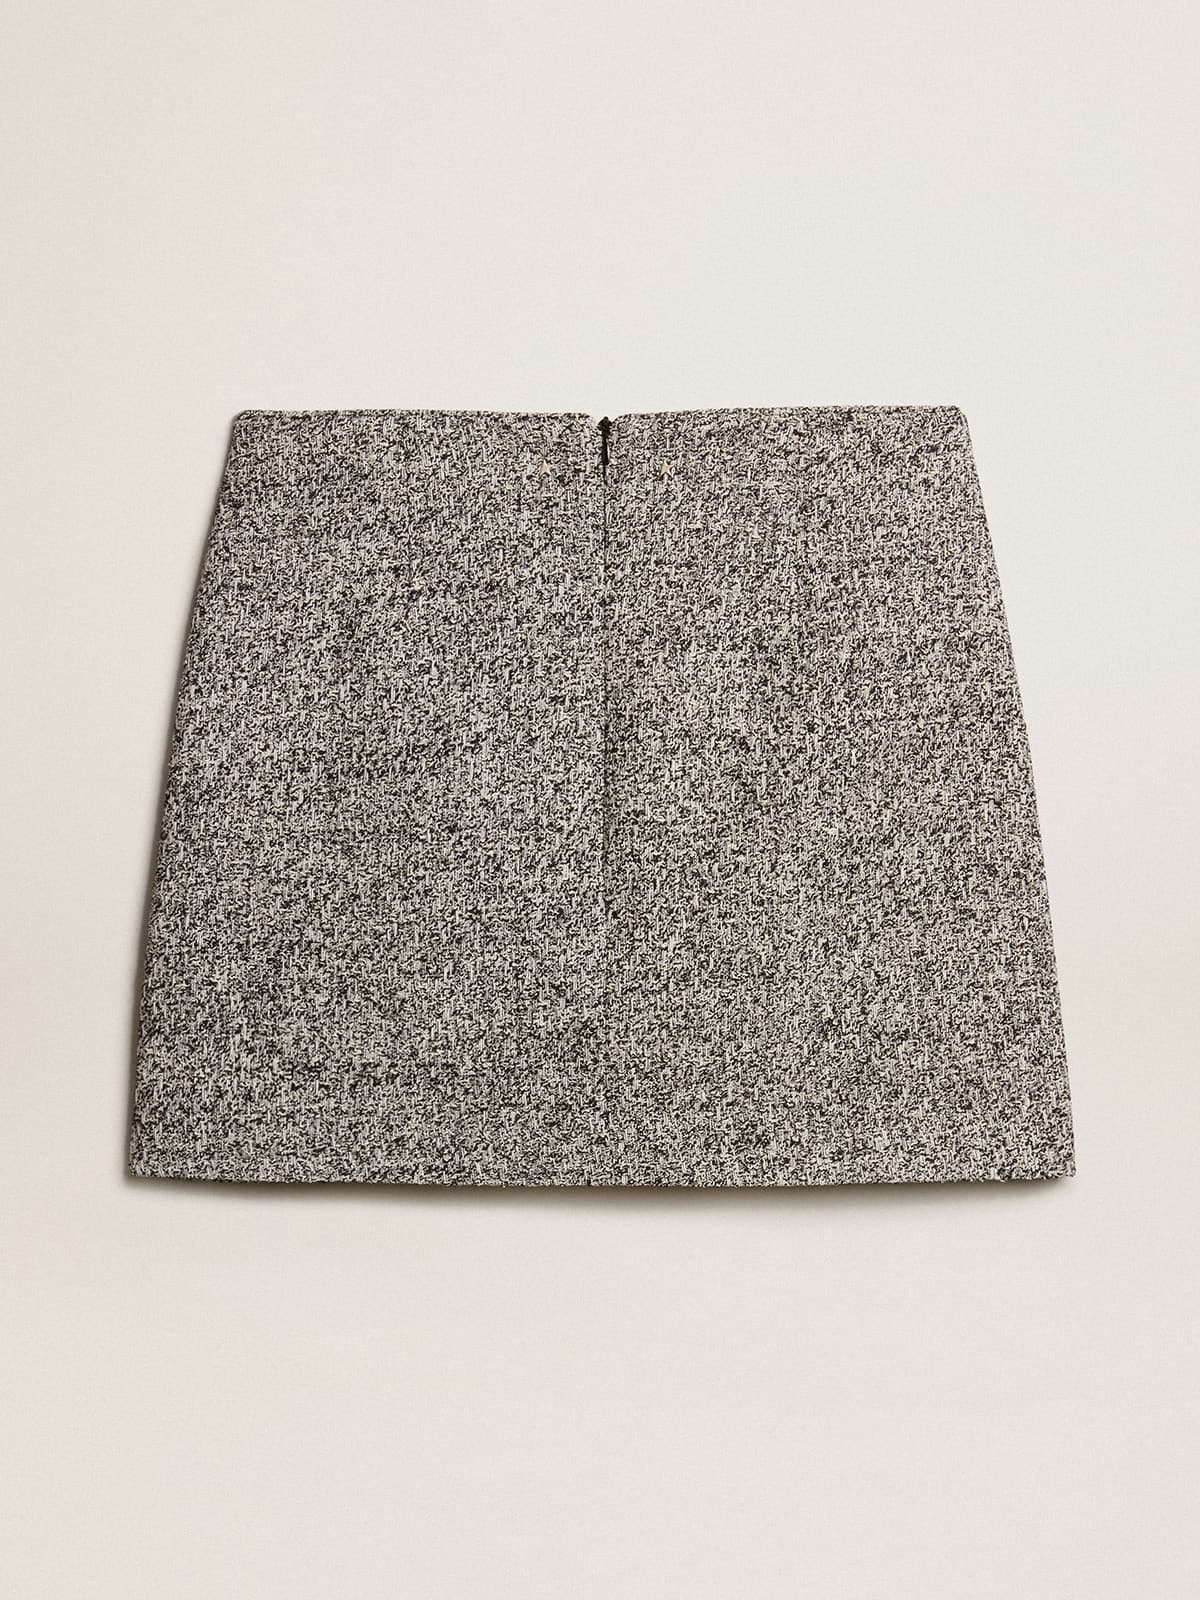 Miniskirt in black and white bouclé cotton - 5